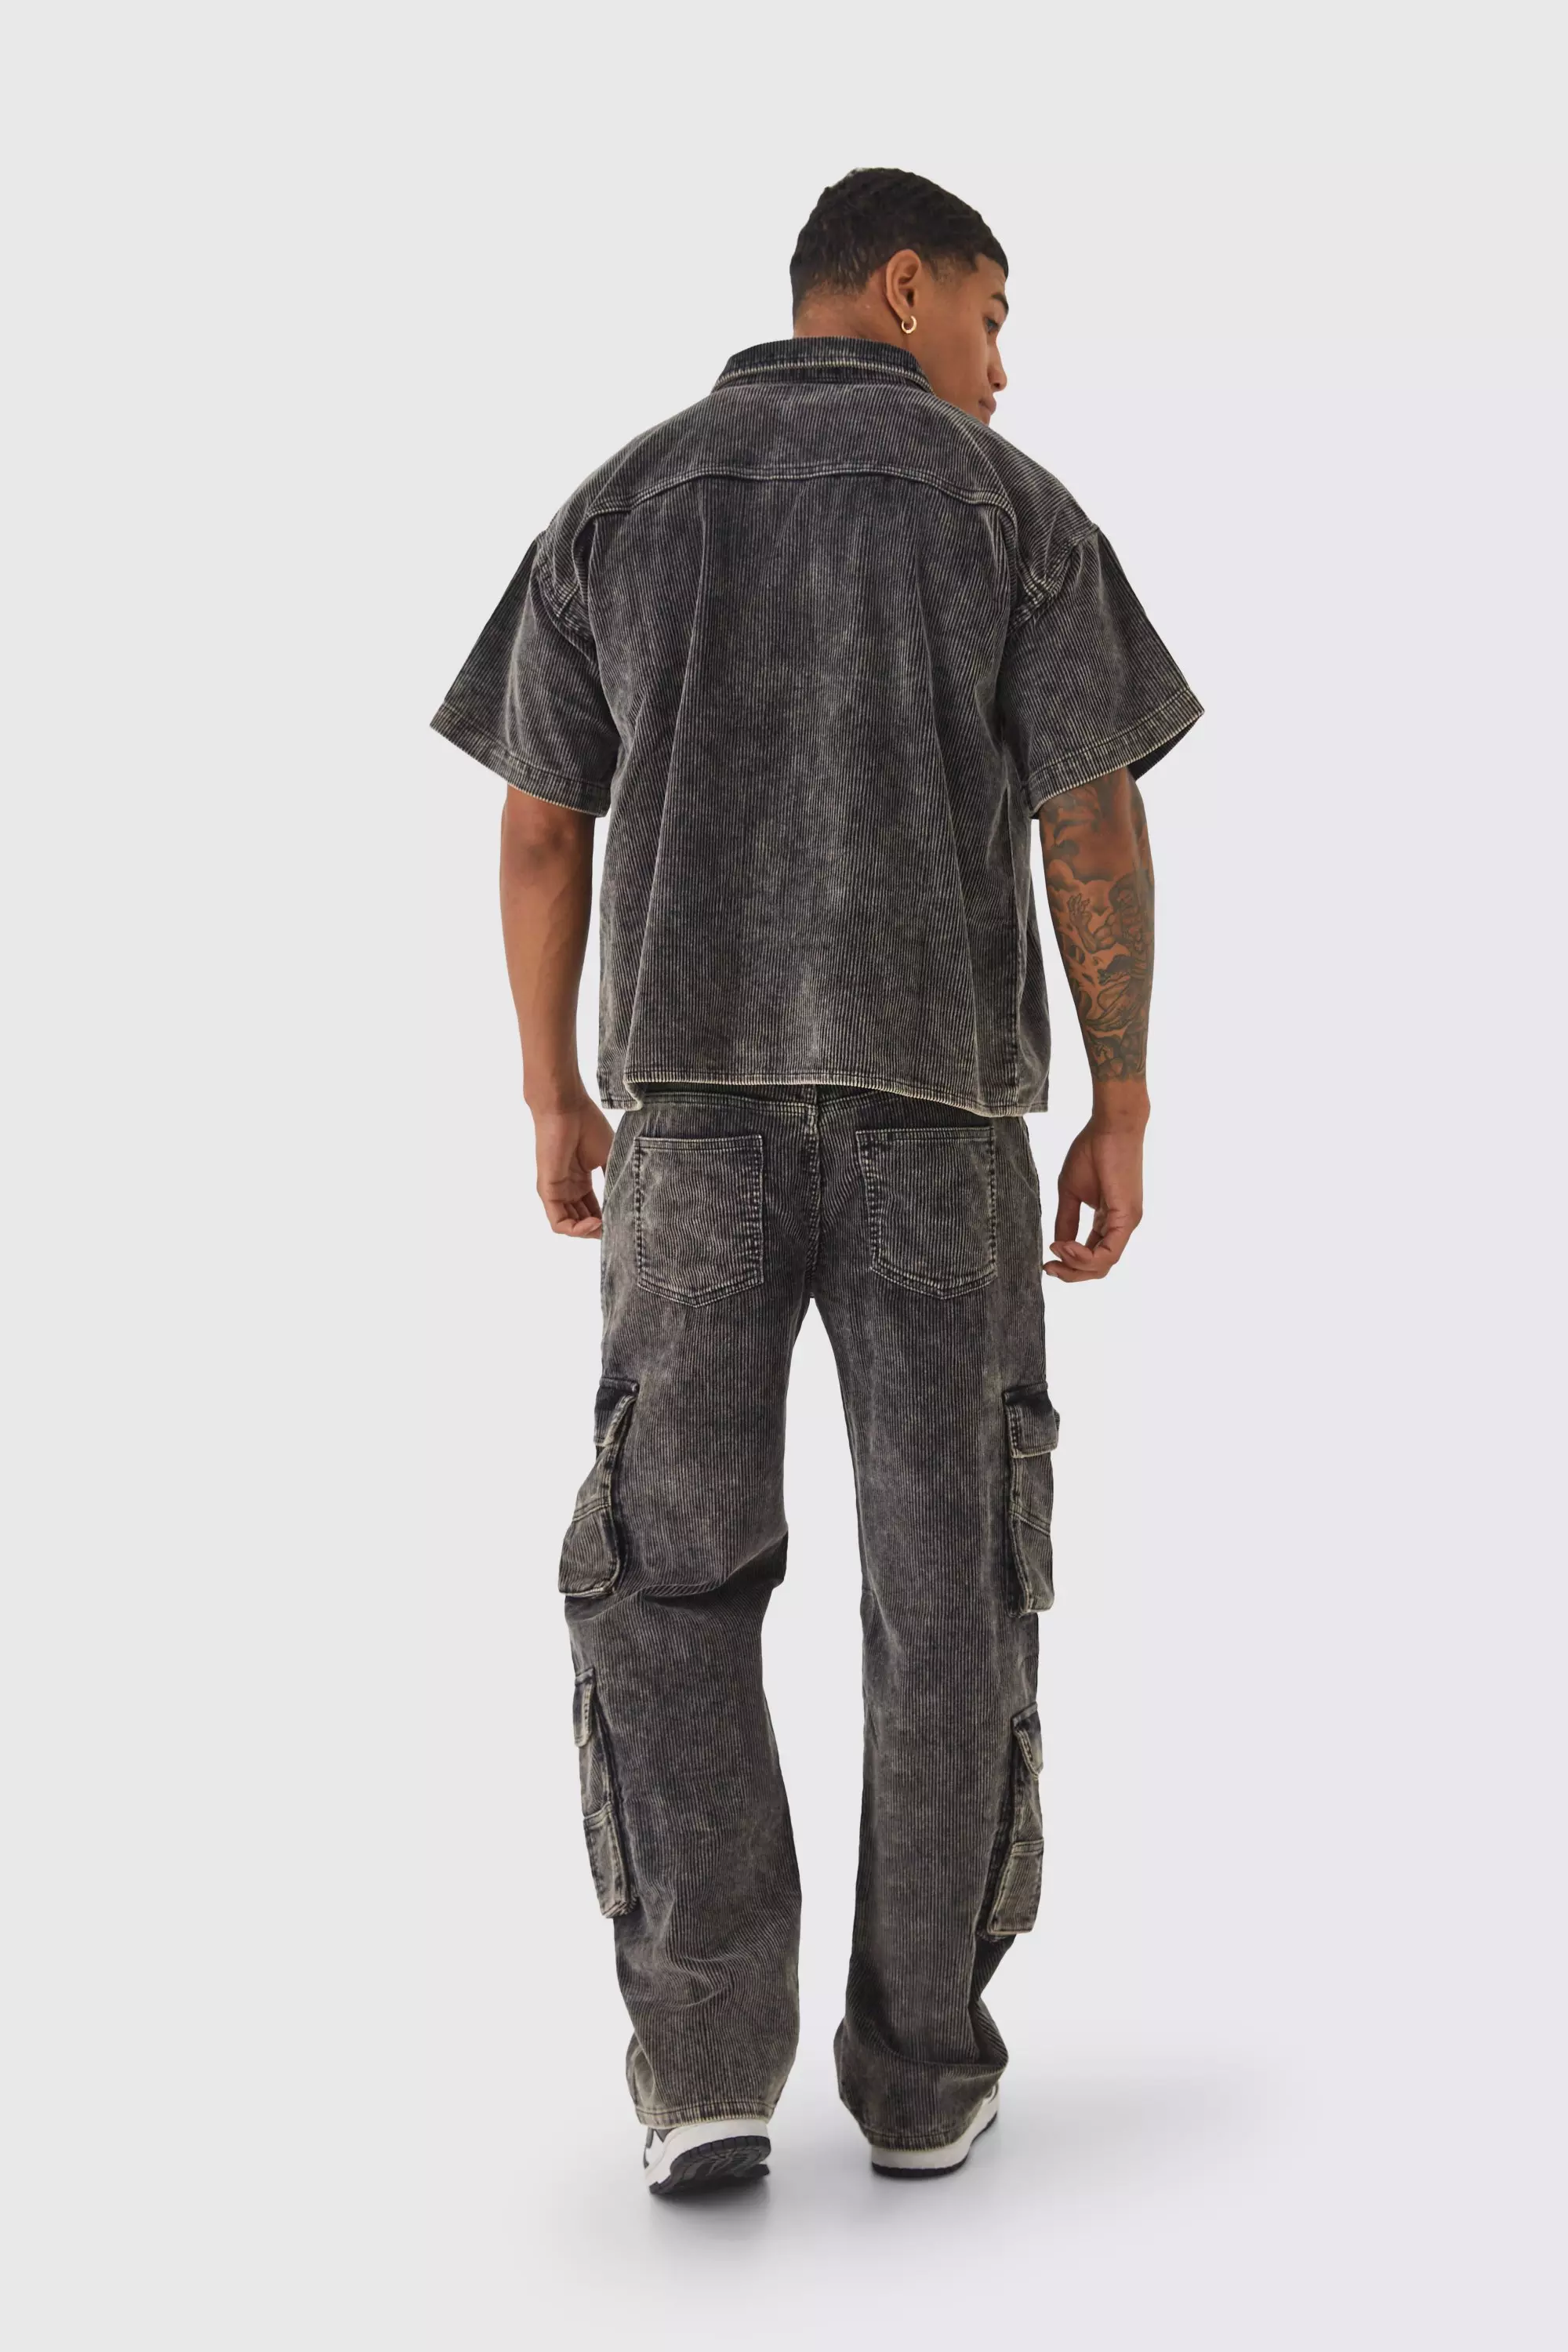 Carhartt Workwear Multi-Cargo Pants